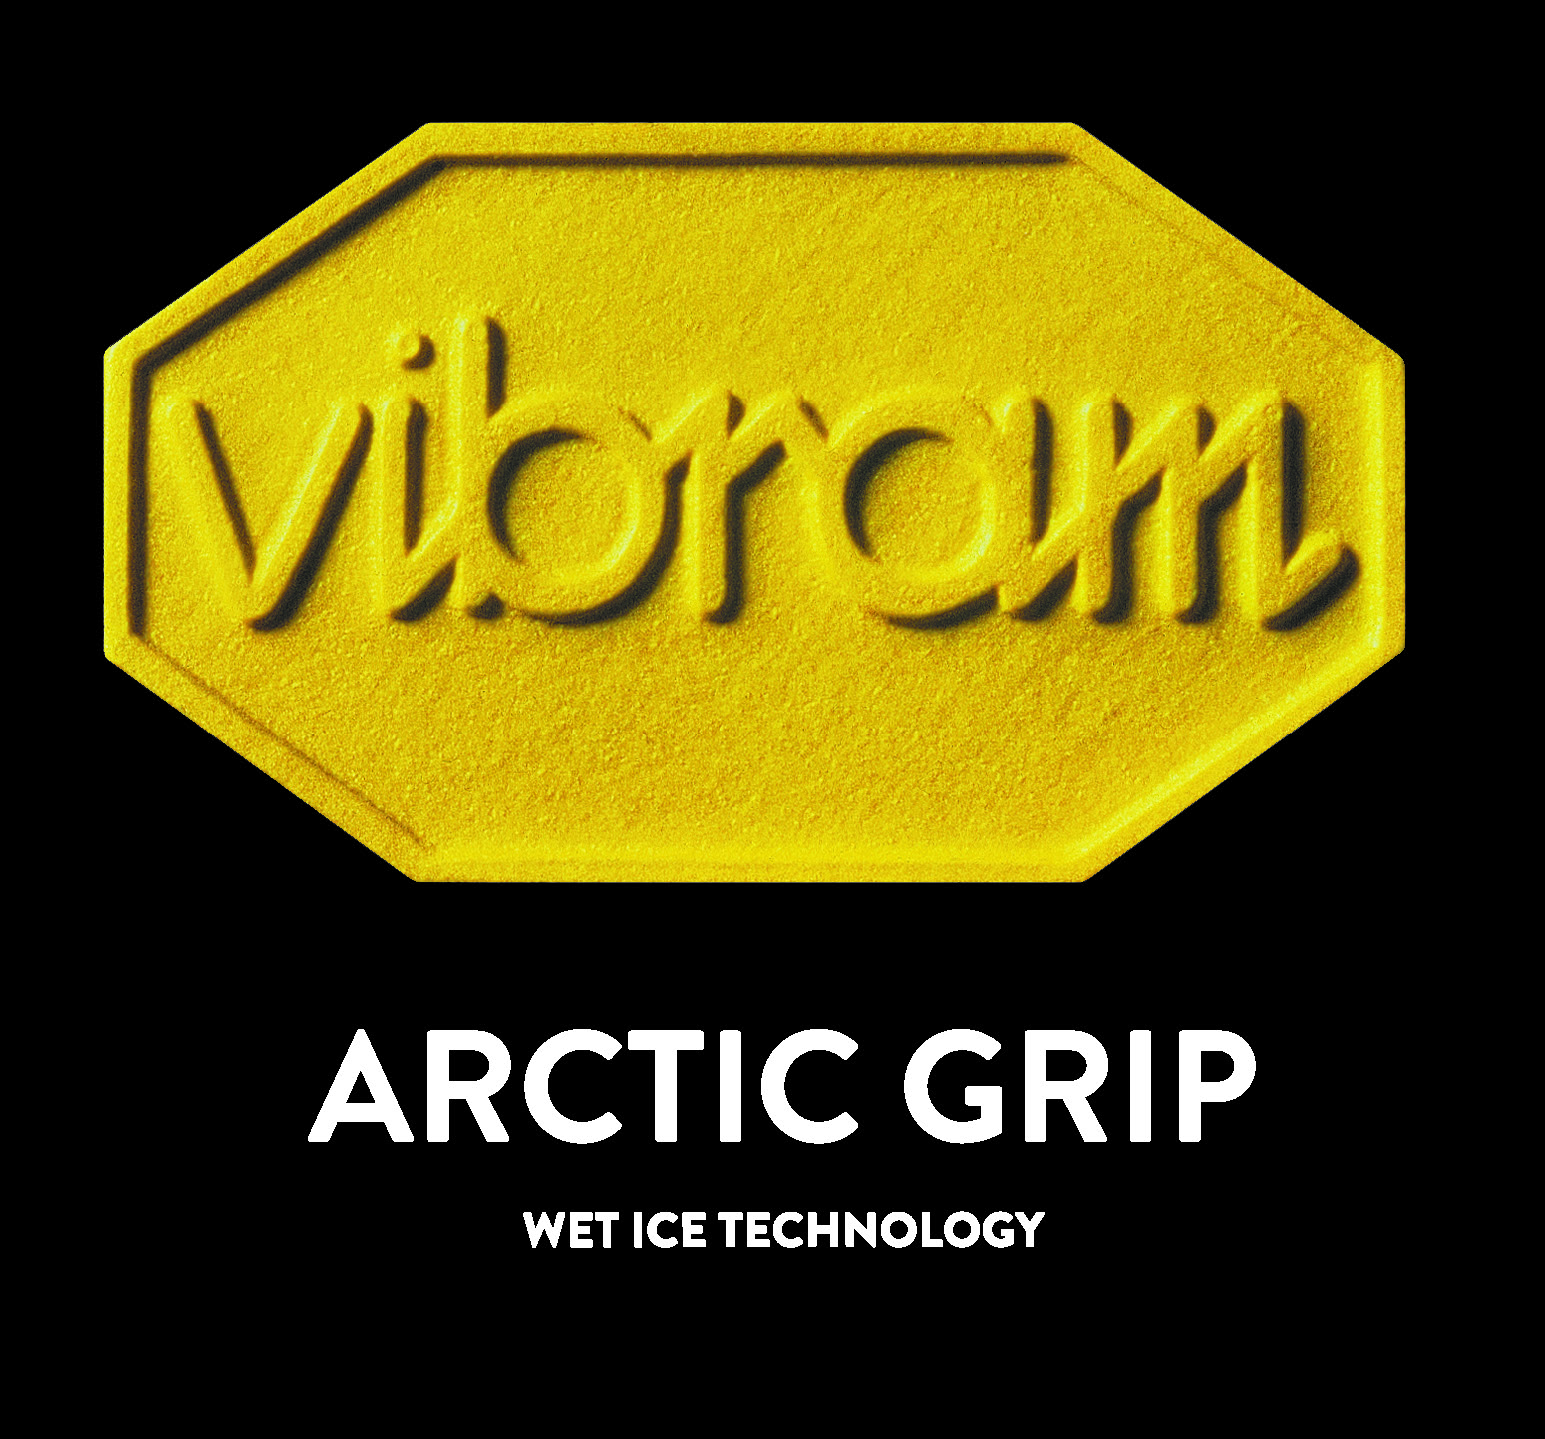 201902_arctic_grip_logo.jpg